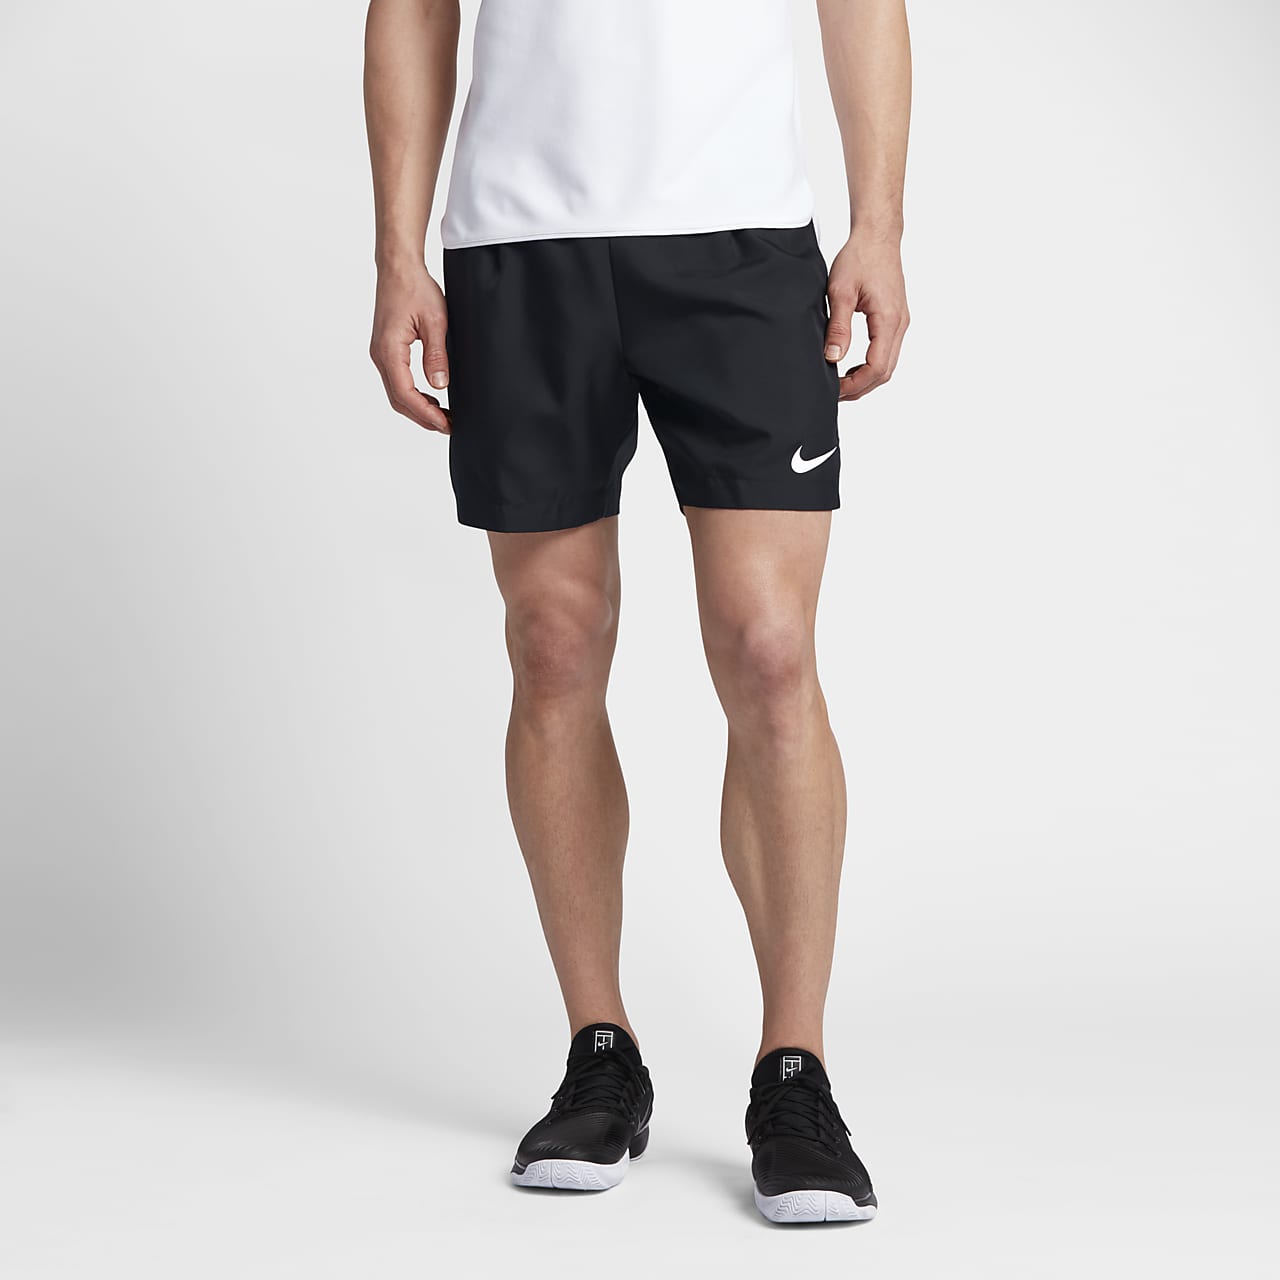 NikeCourt Dry Men's 7" (18cm approx.) Tennis Shorts